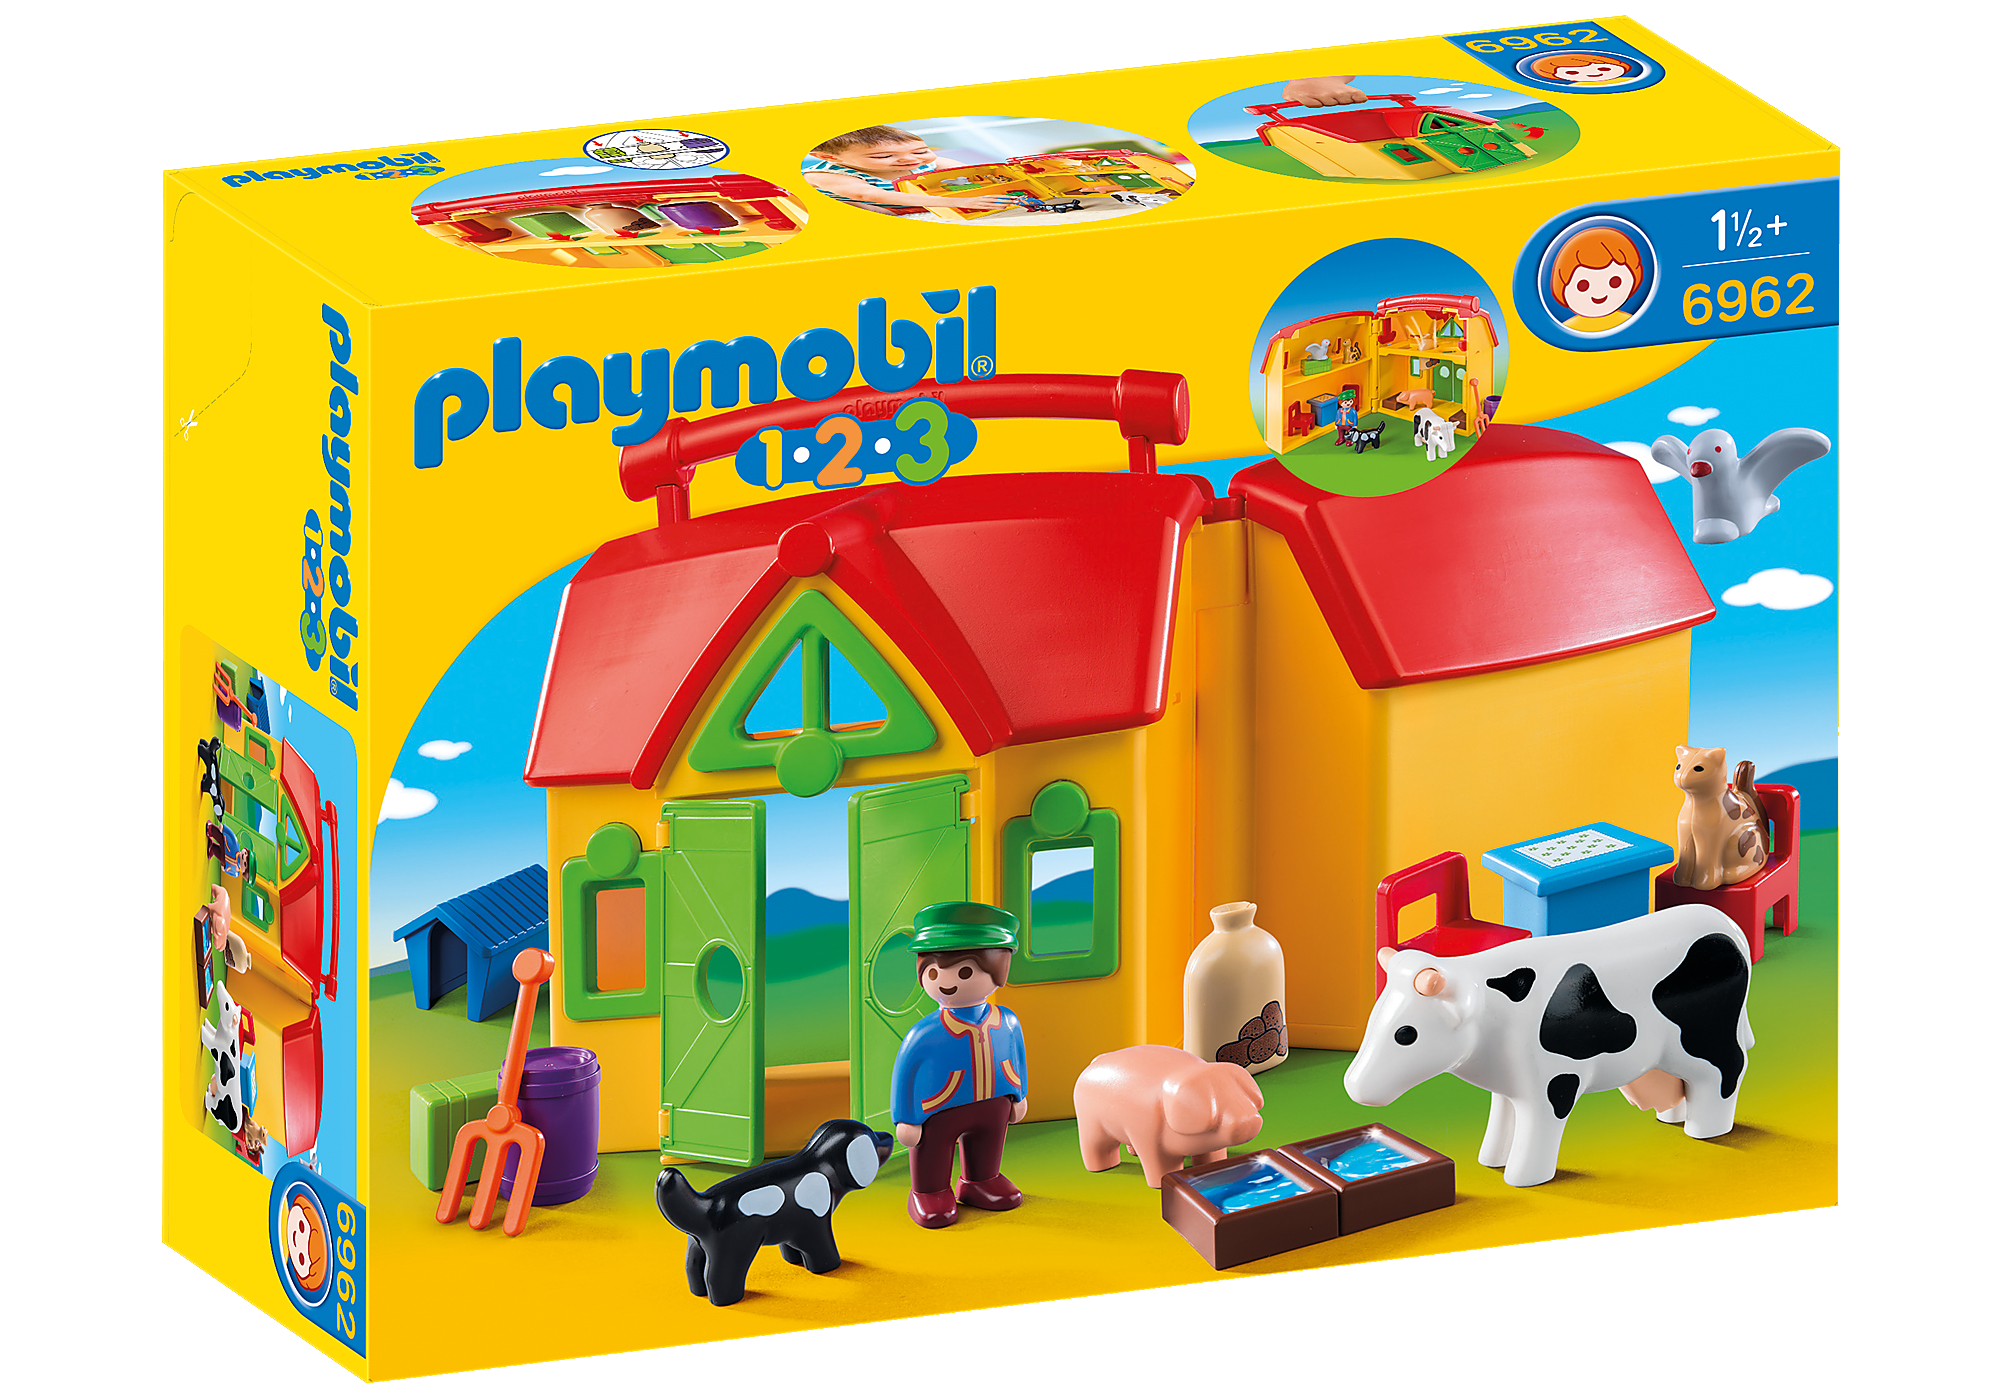 Playmobil - Playmobil